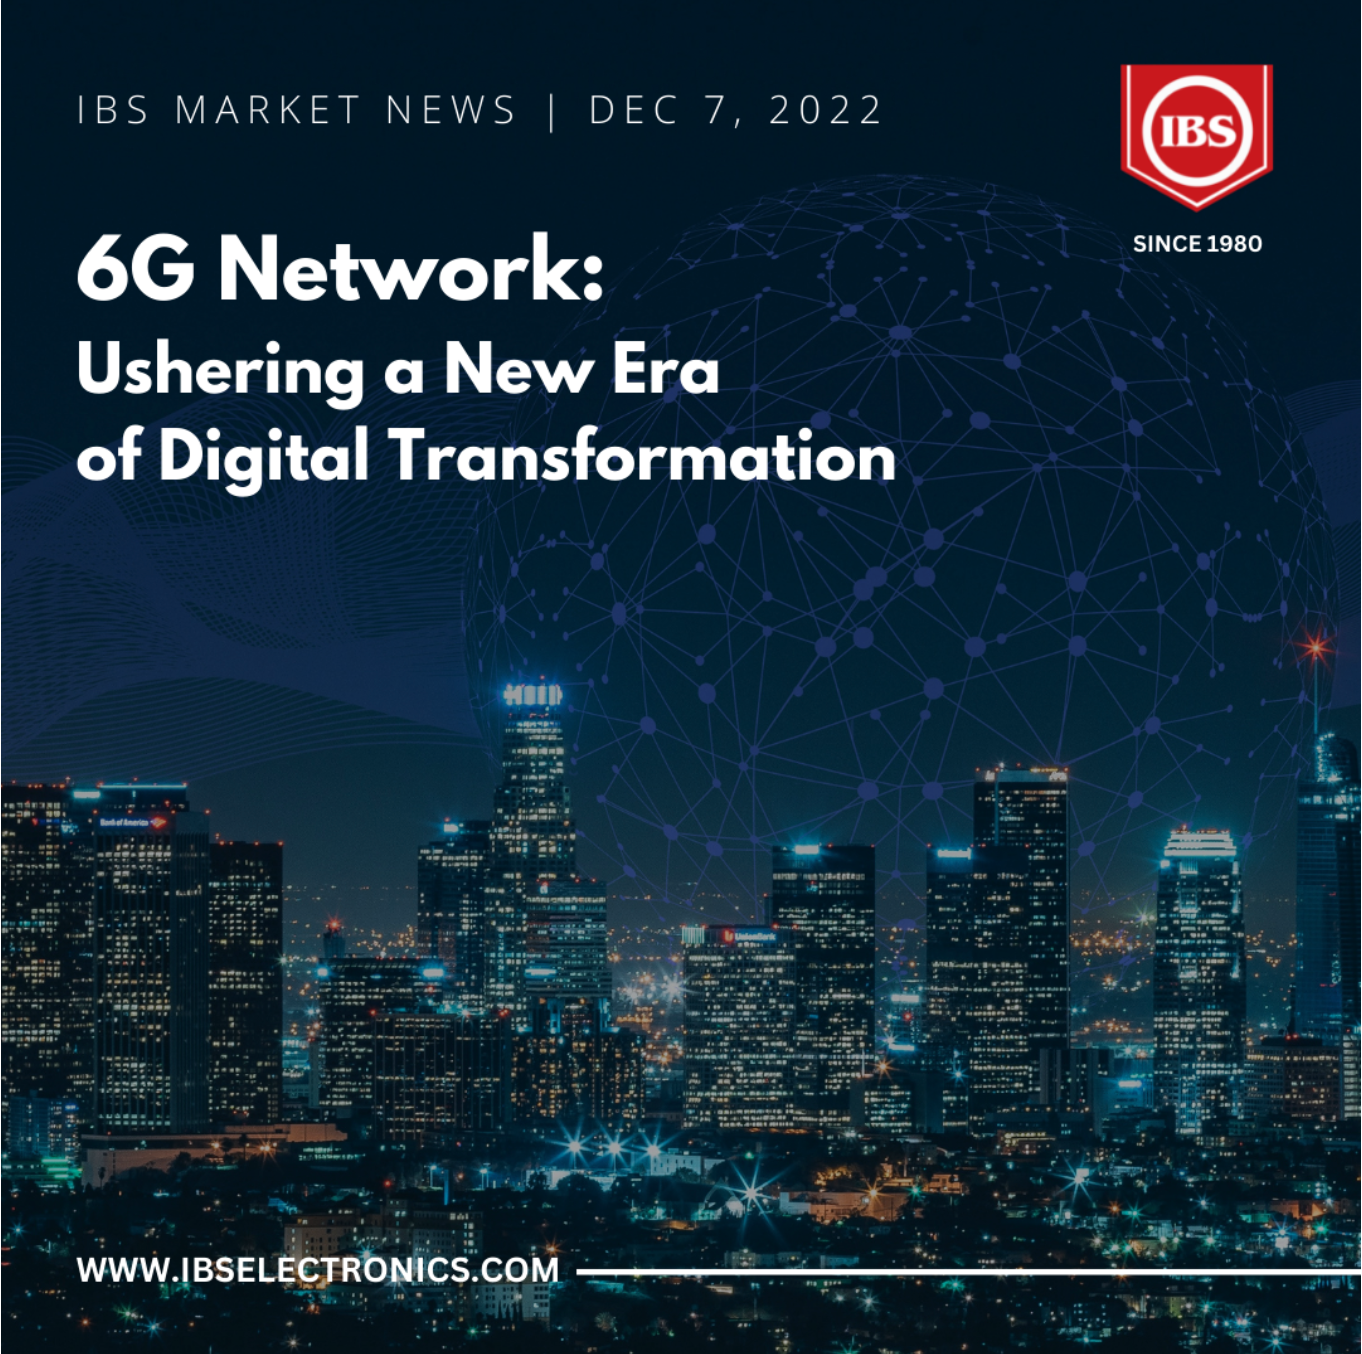 6G Network: Ushering a New Era of Digital Transformation